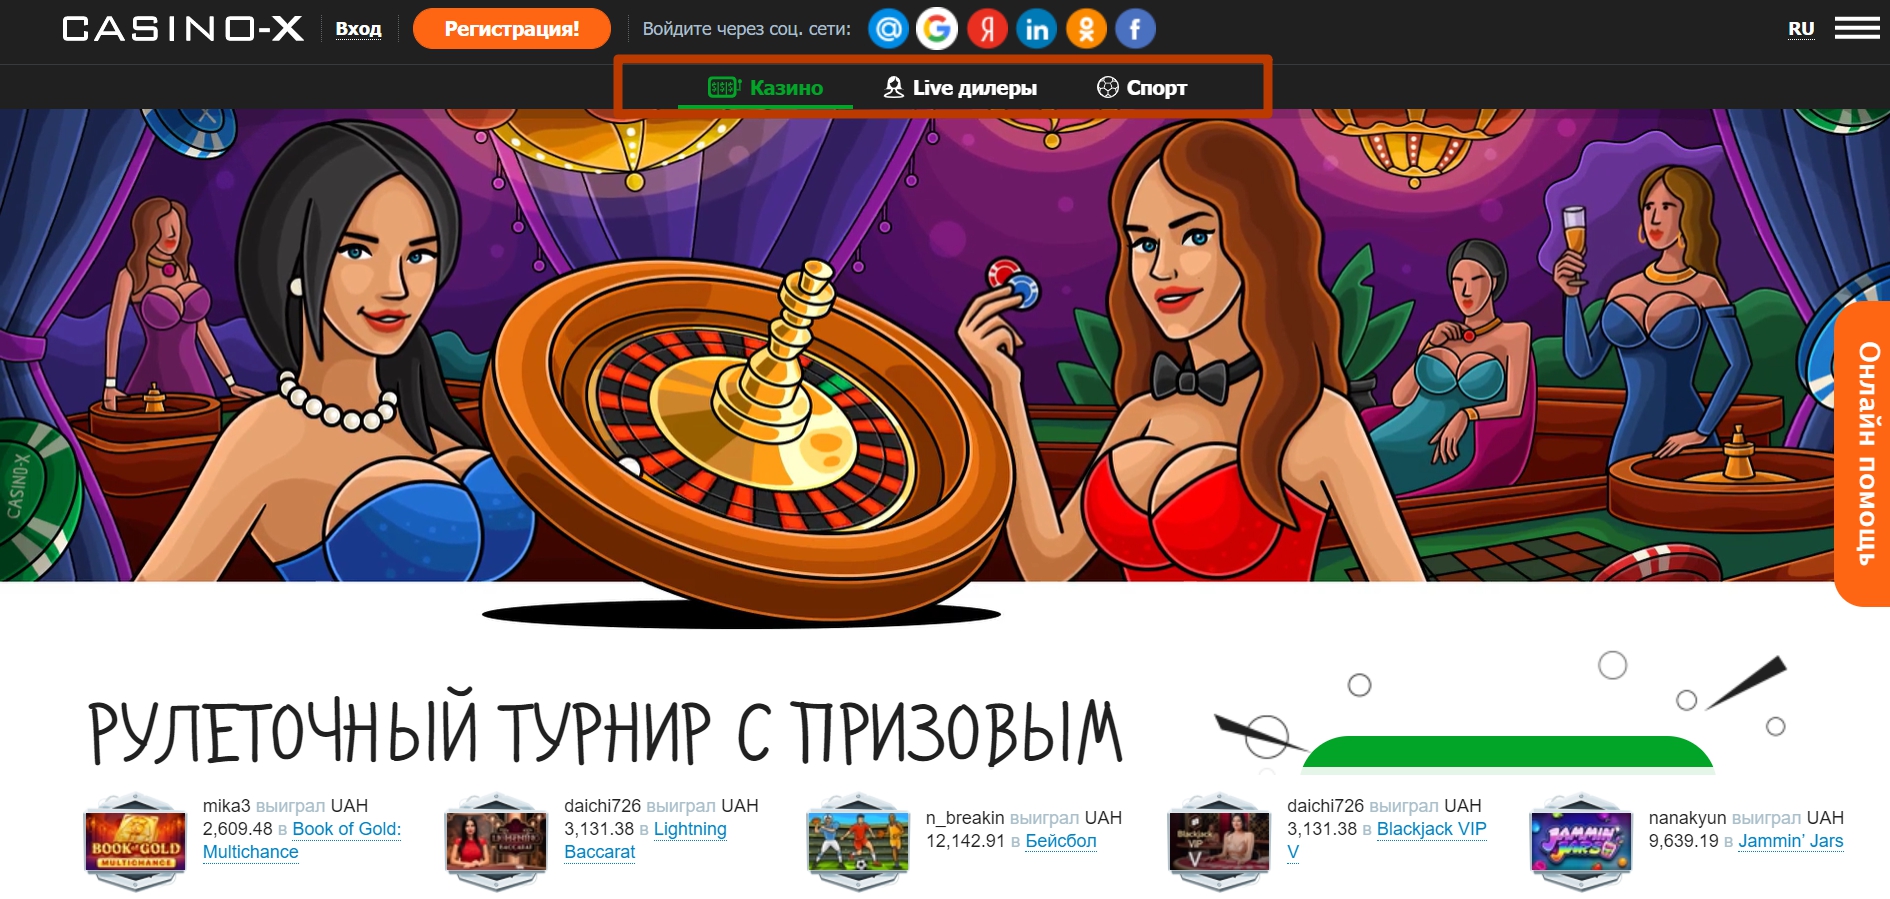 casino x официальный сайт casino x911 ru